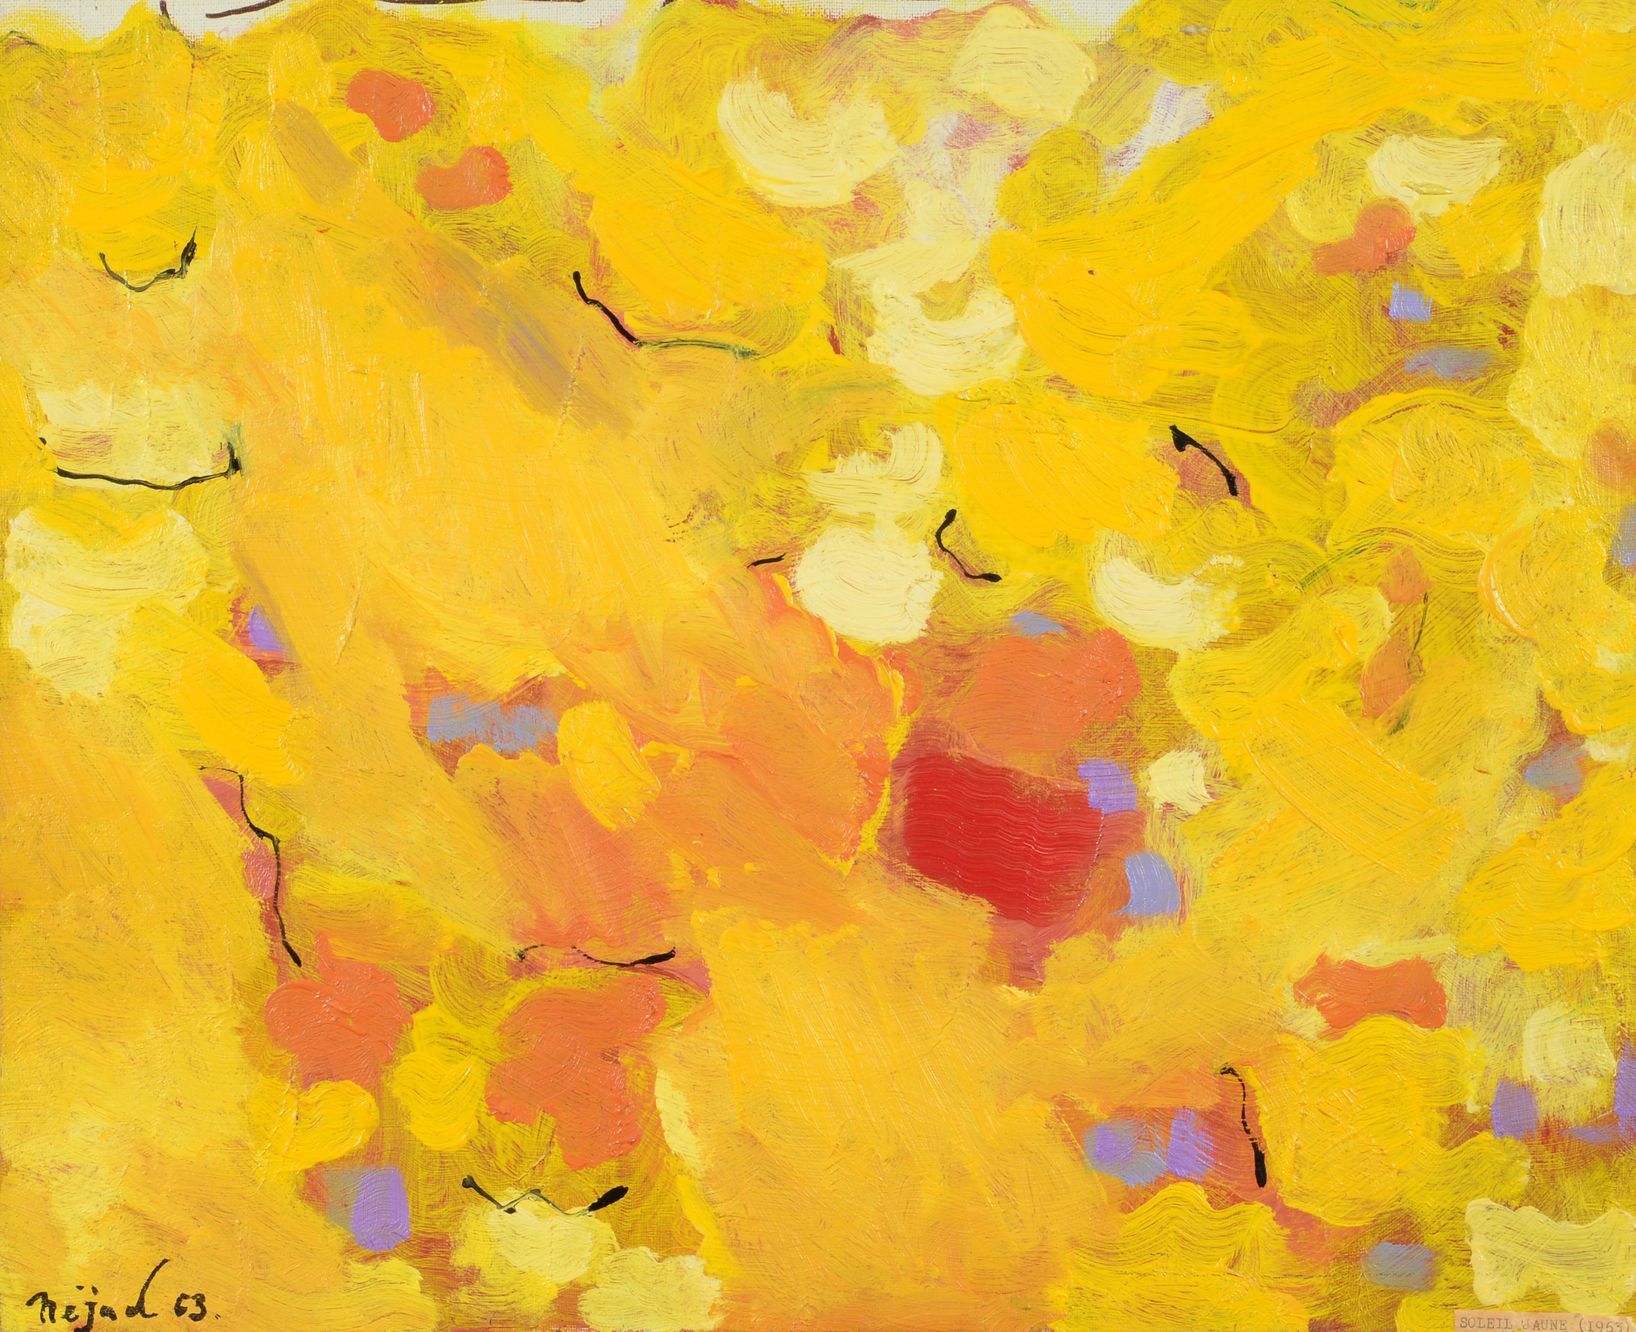 Null 
内贾德-德雷姆 (1923 - 1995)

黄太阳1963

布面油画，左下方有签名和日期63

38 x 46 厘米

(TO-BE)

我们感&hellip;